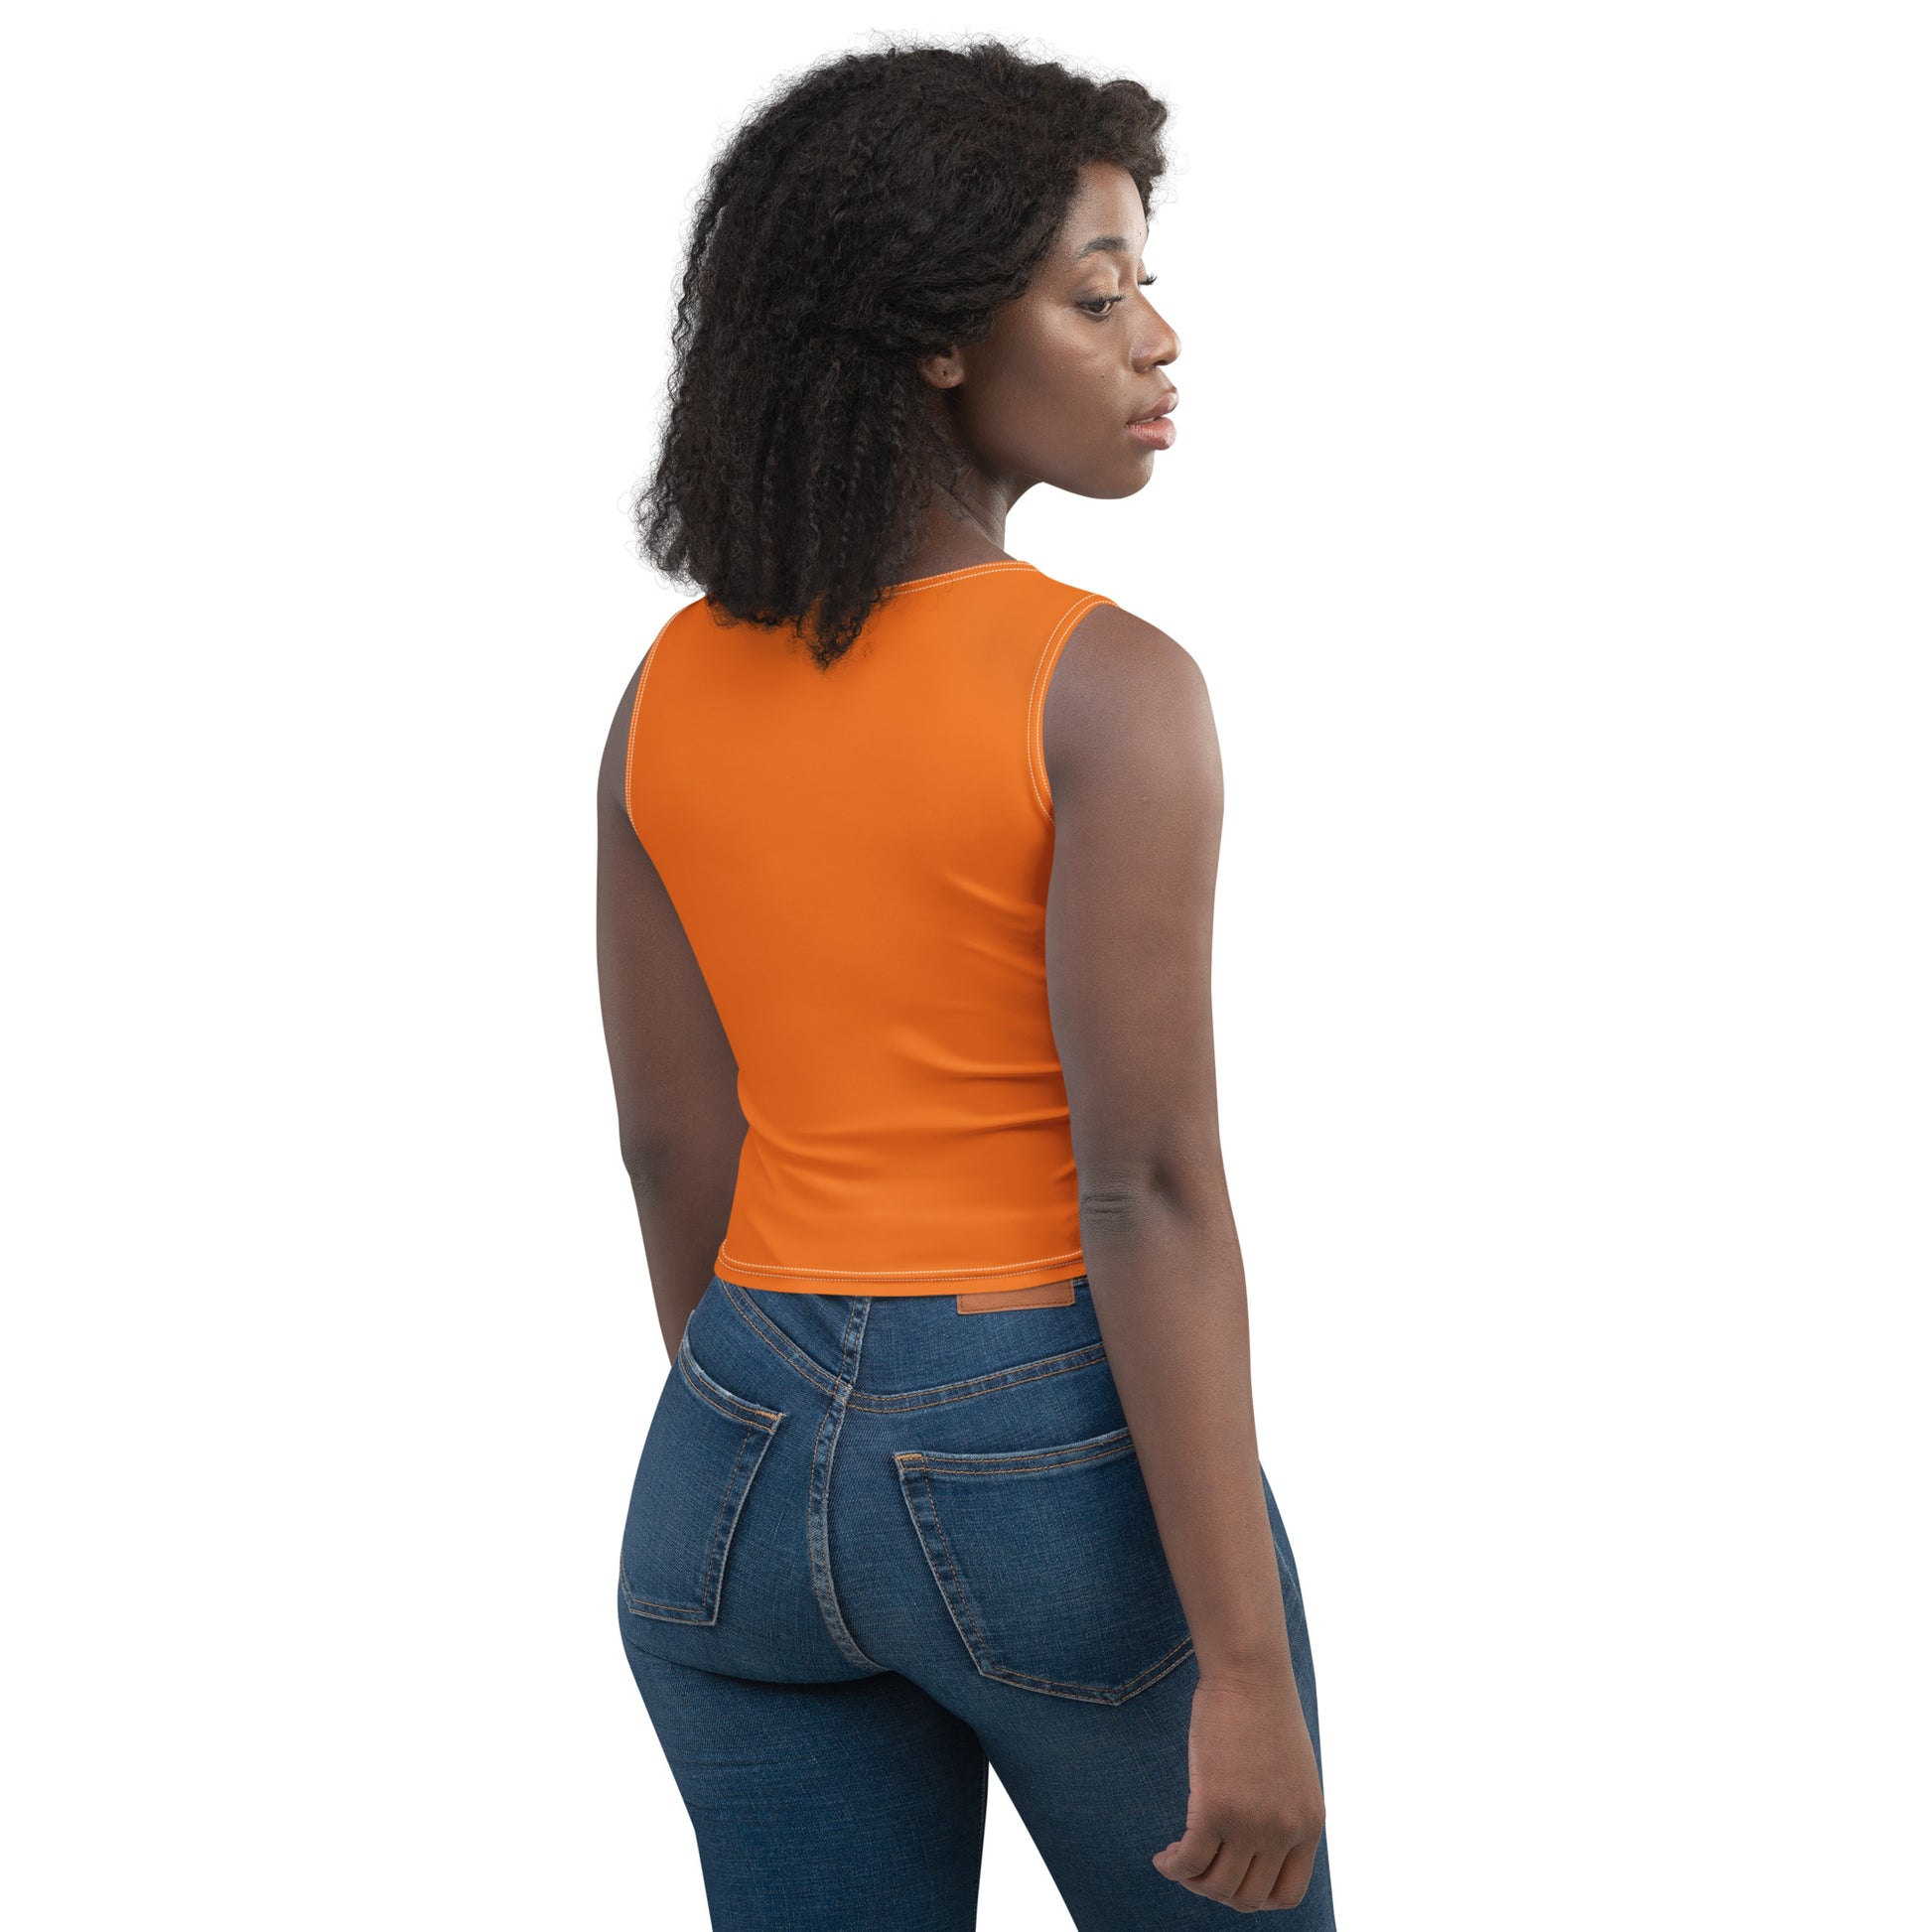 Humble Sportswear, women's orange color match shirt, casual cropped tank top